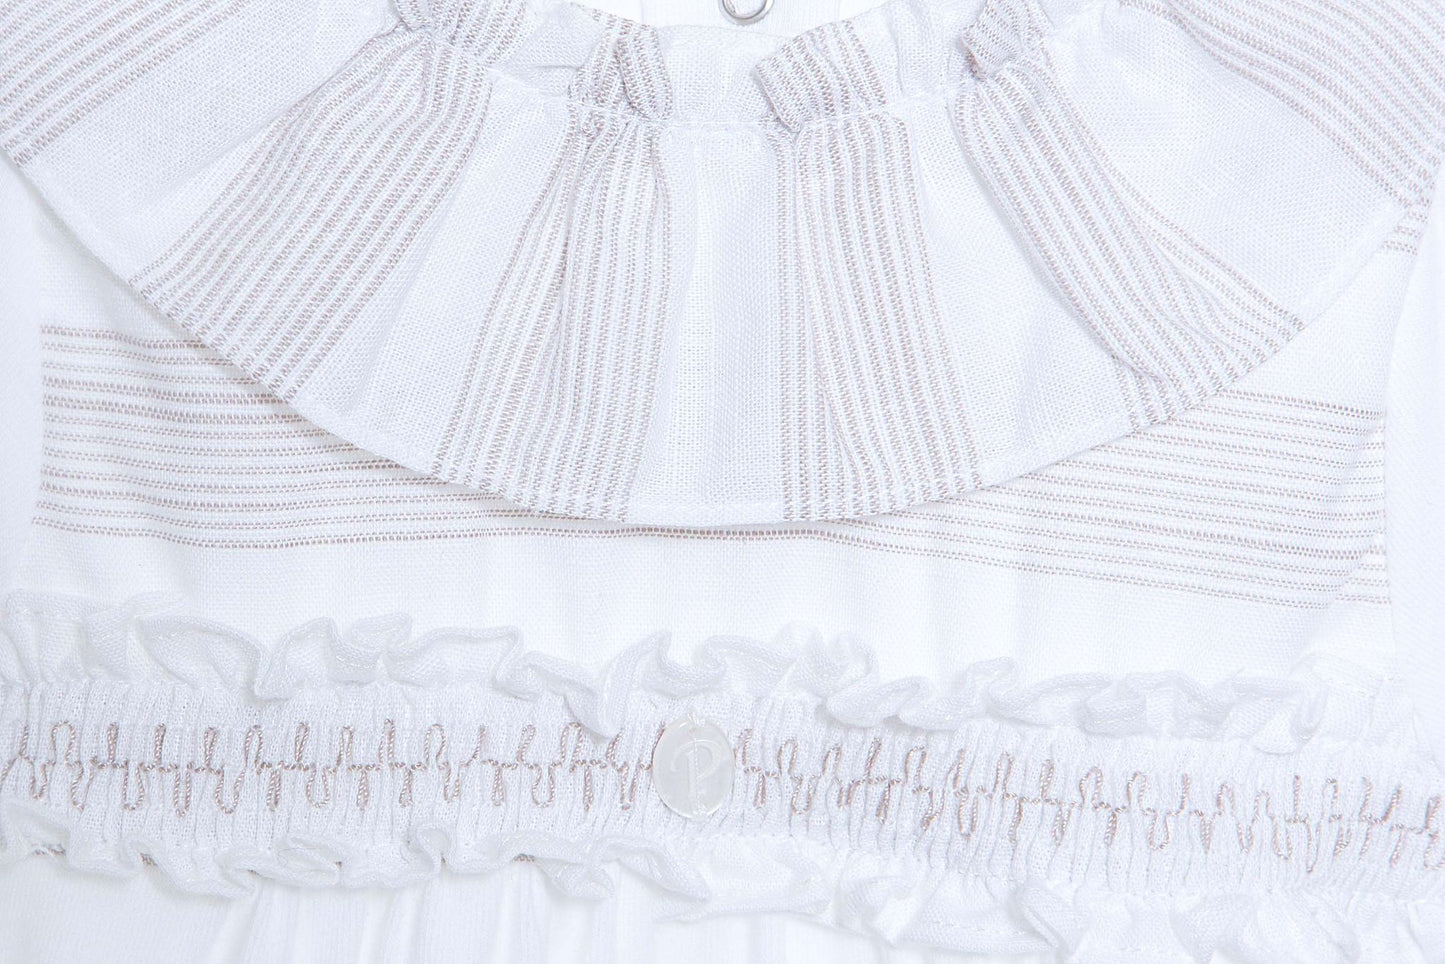 Stripe Frill Collar Smocked Babygrow - White